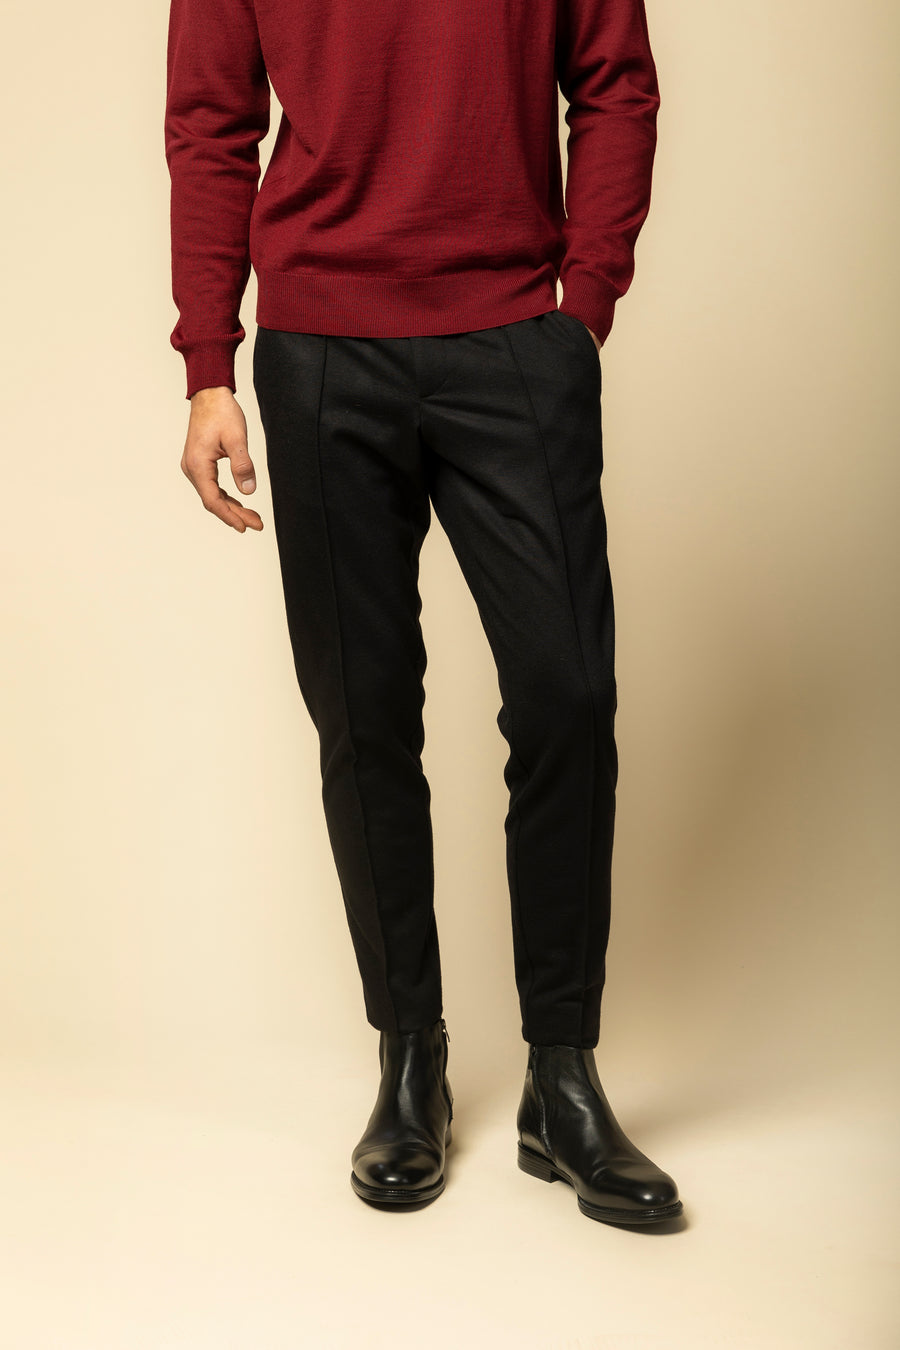 Pantaloni Confort Line negru 100% lana flannel